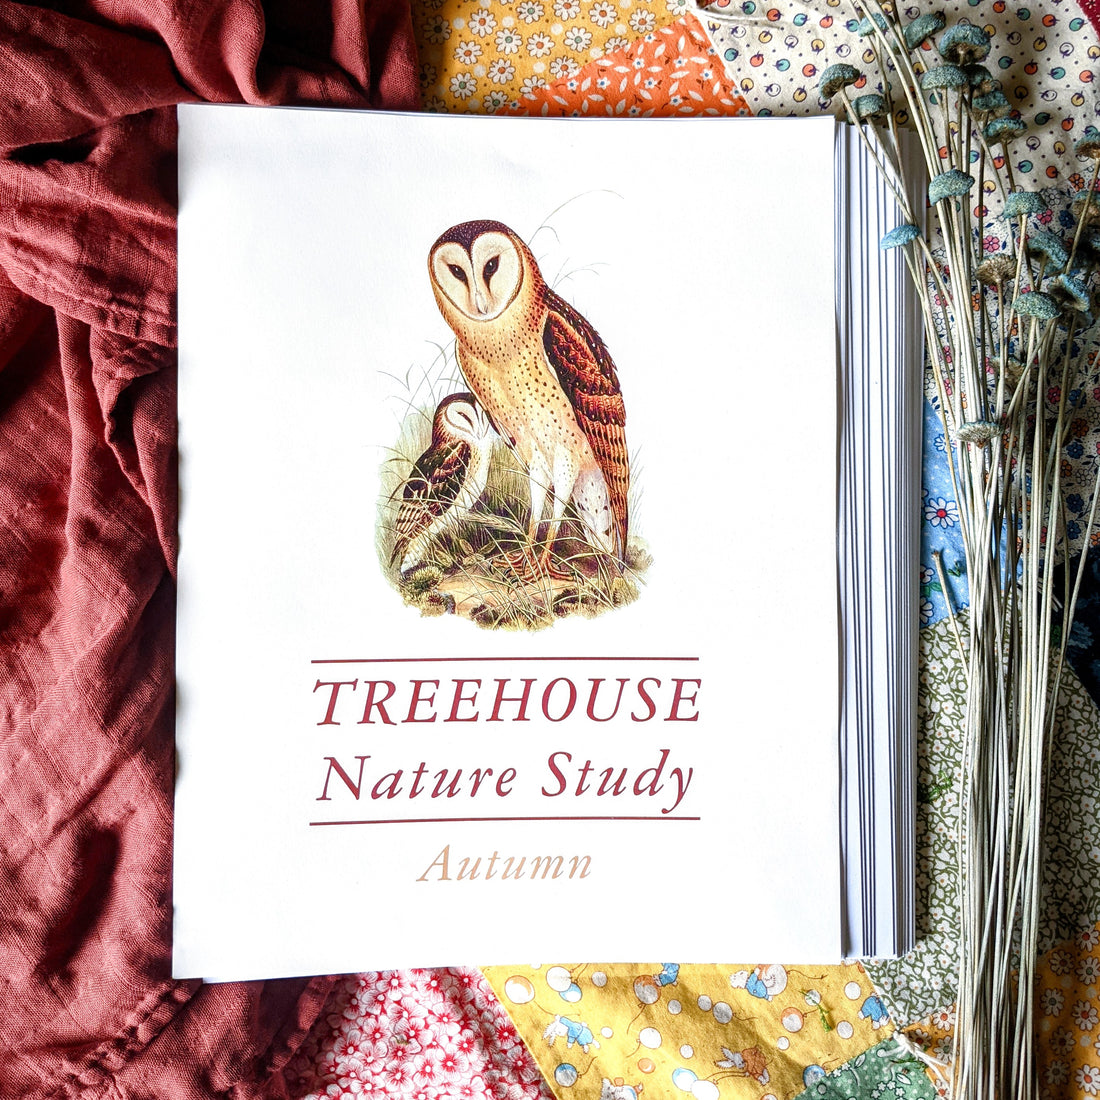 Treehouse Nature Study: Autumn Student Sheets (Hard Copy)